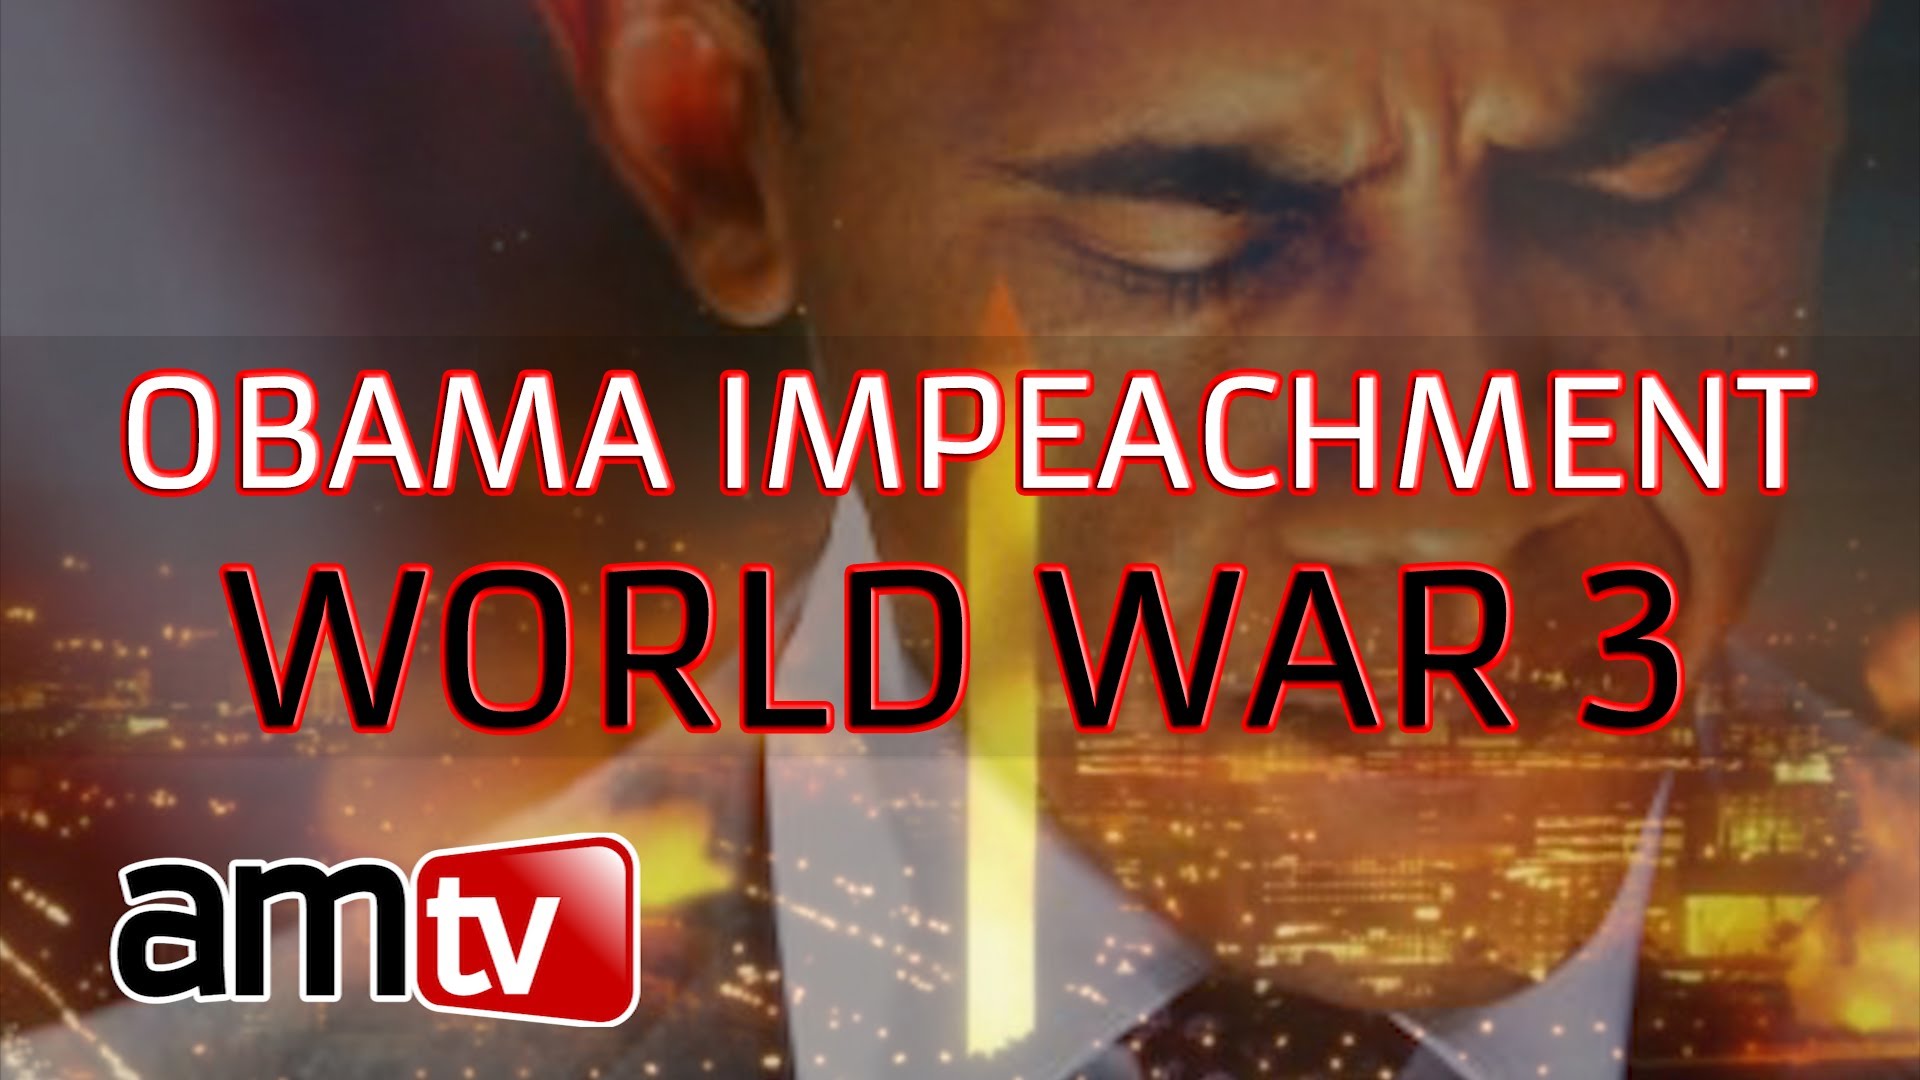 Obama Impeachment and World War 3